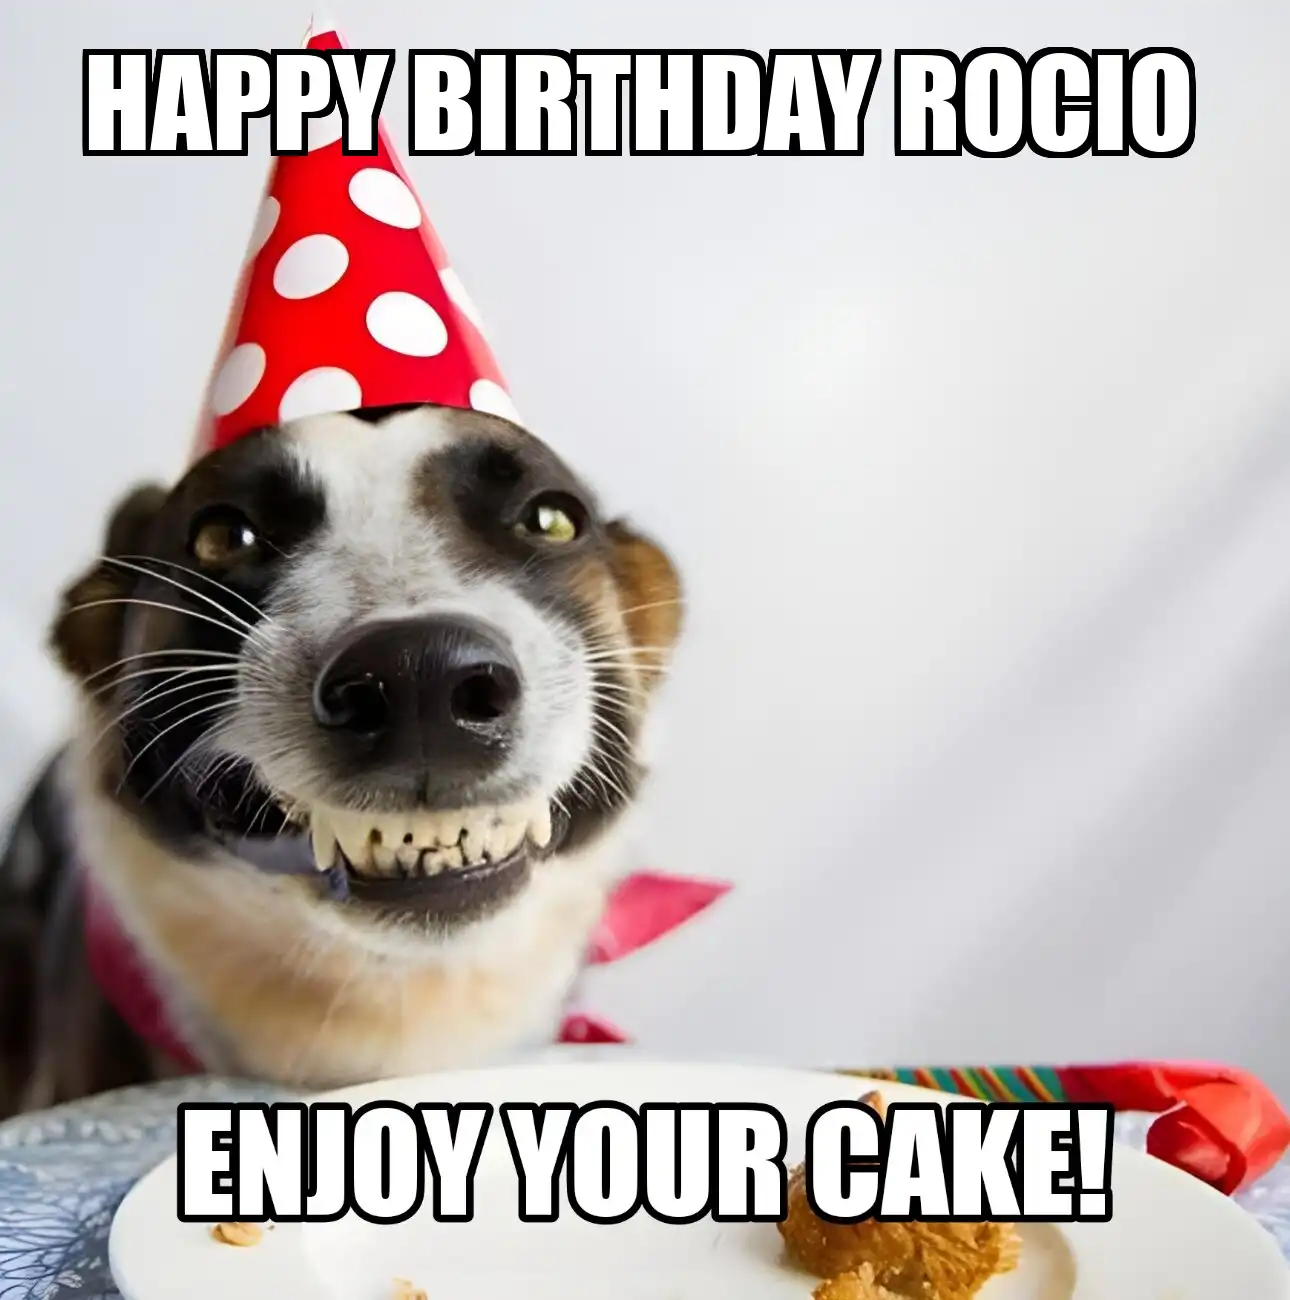 Happy Birthday Rocio Enjoy Your Cake Dog Meme